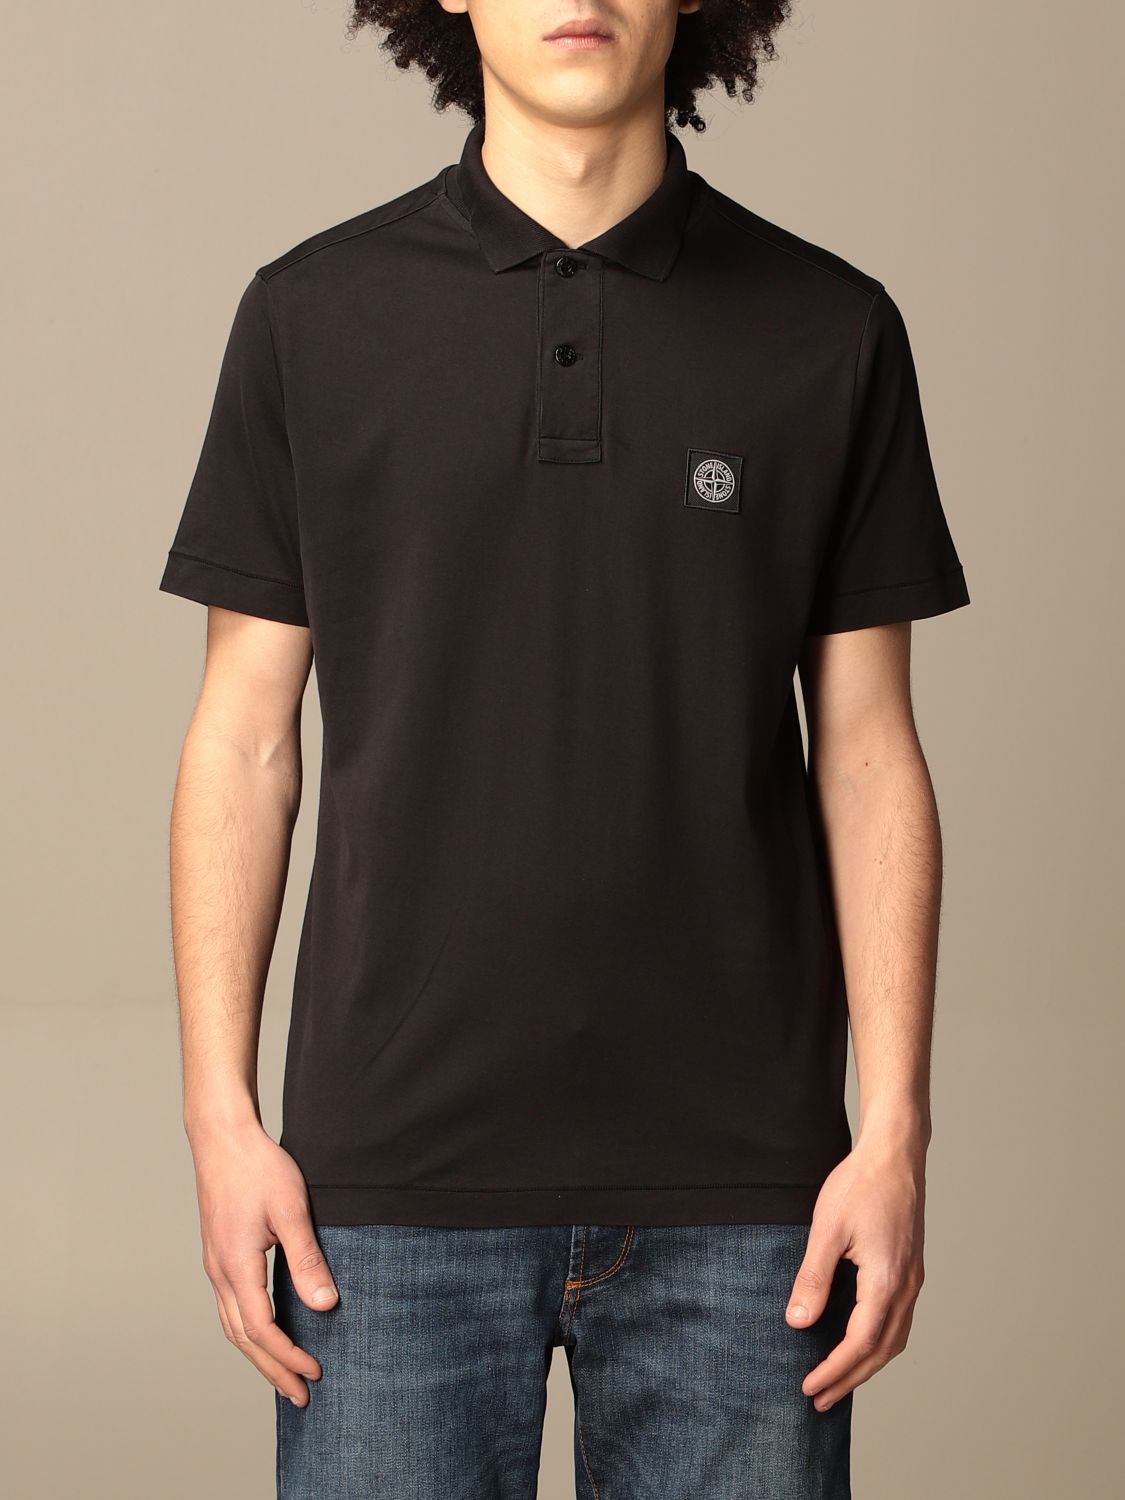 STONE ISLAND: basic polo shirt cotton with logo Black | Stone Island shirt 22613 on GIGLIO.COM